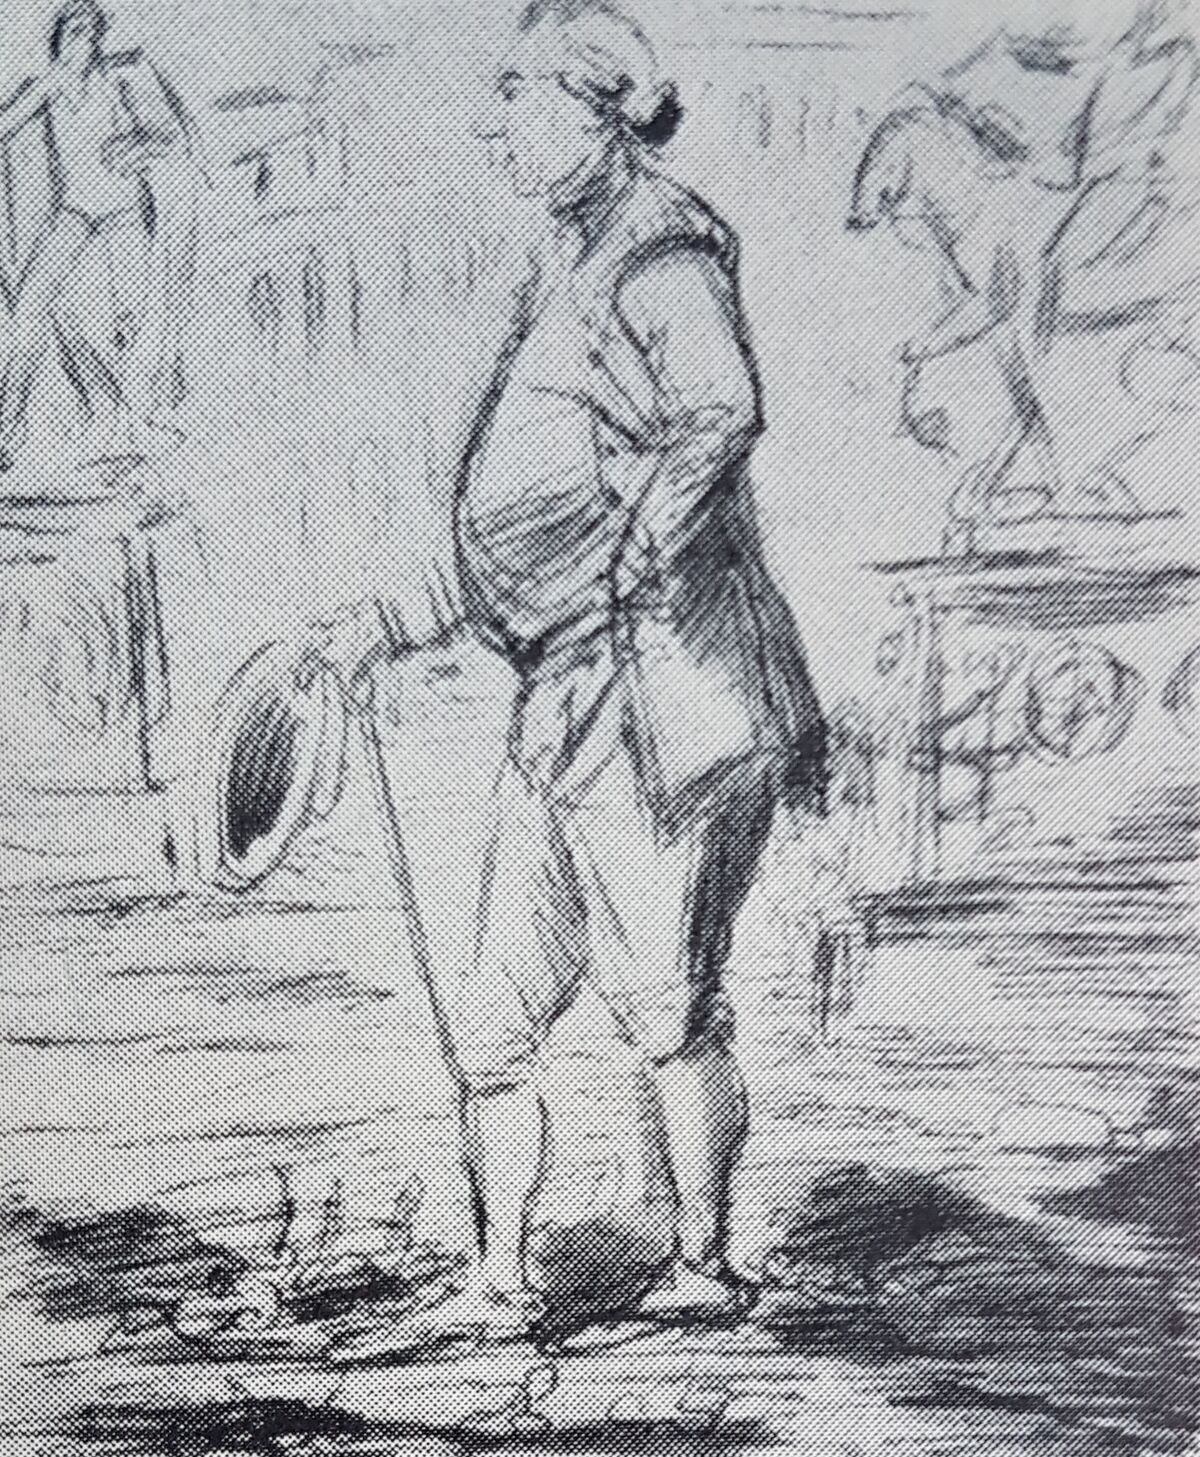 GFD 1/15: Pierre Hubert L’Archevêque (Bleistiftskizze von Johan Tobias Sergel, um 1770–1780)